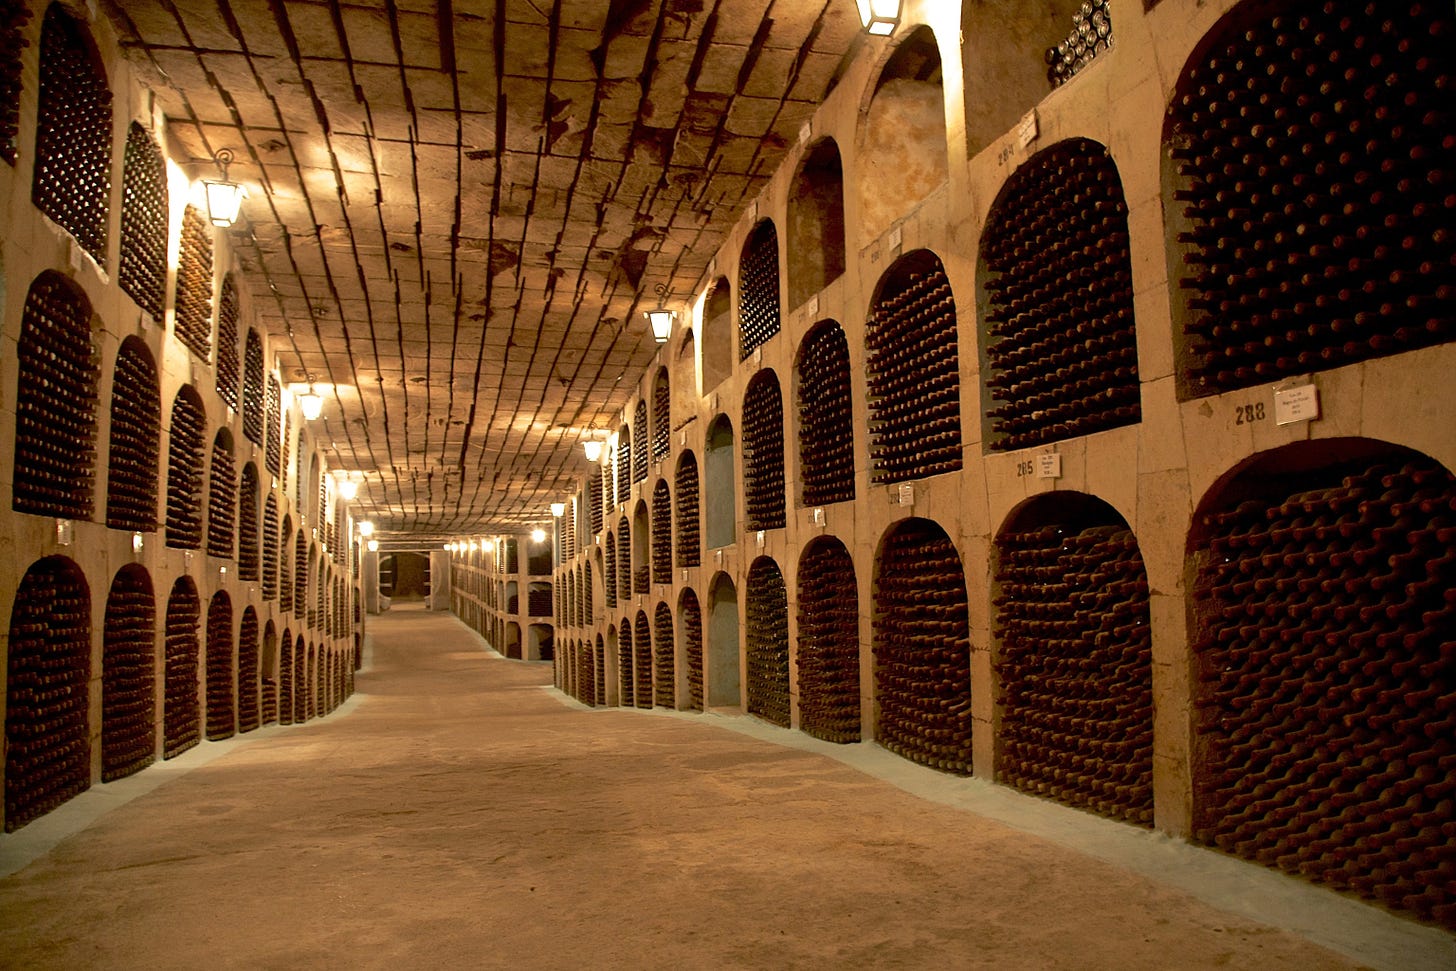 The World's Largest Wine Cellar in Moldova